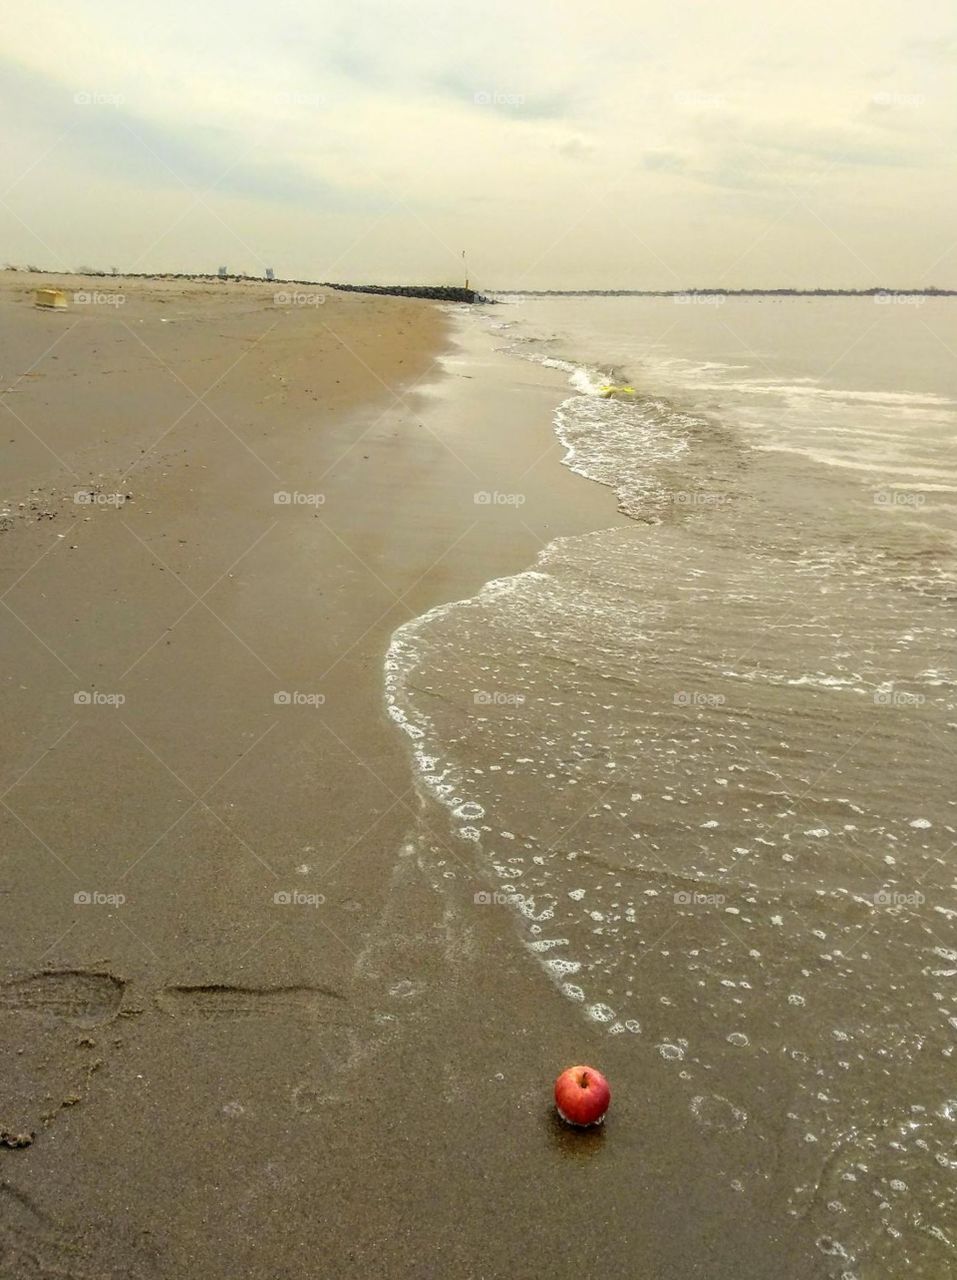 Apple on beach